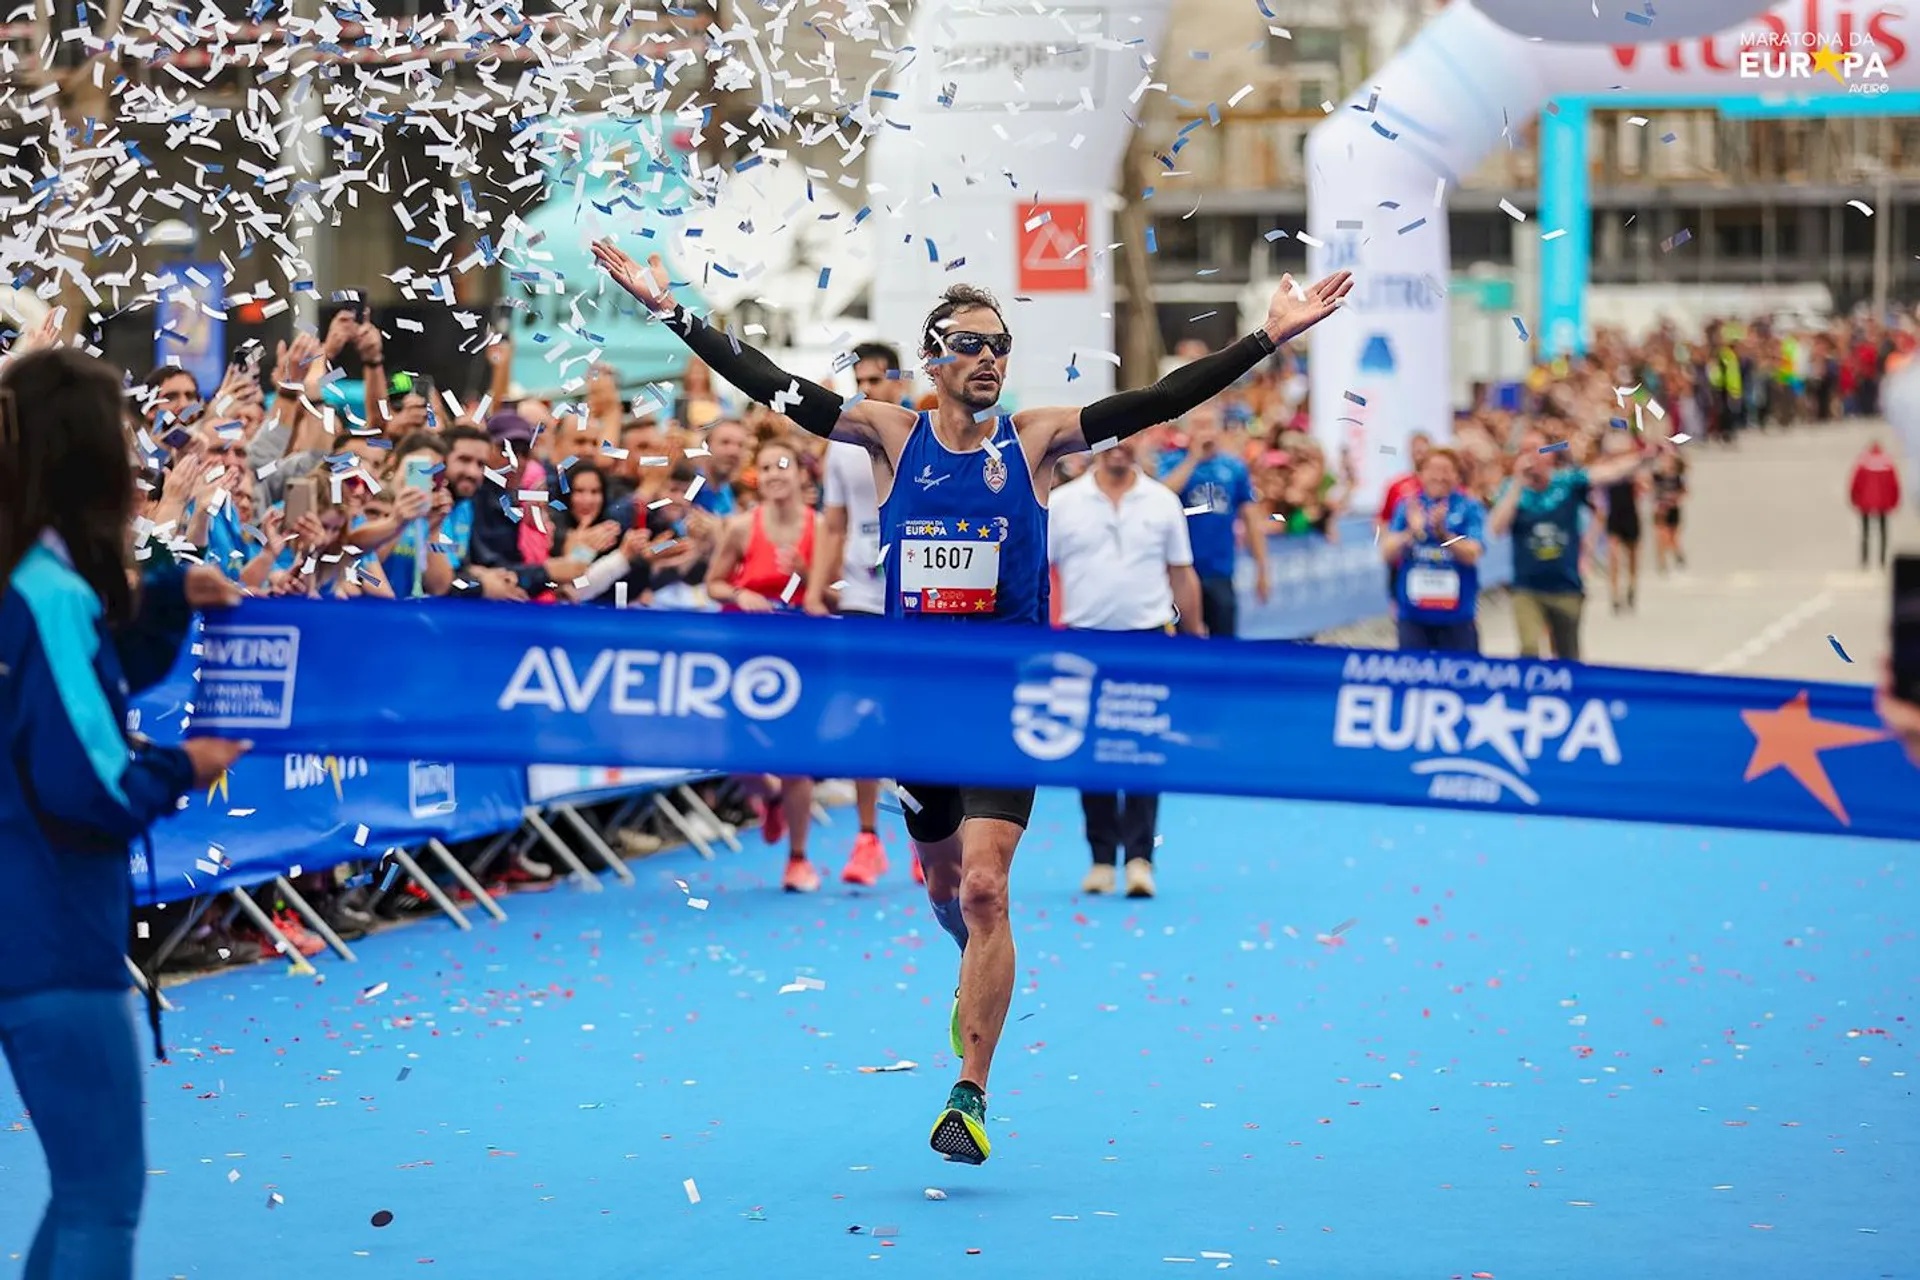 Image of Maratona da Europa - Aveiro